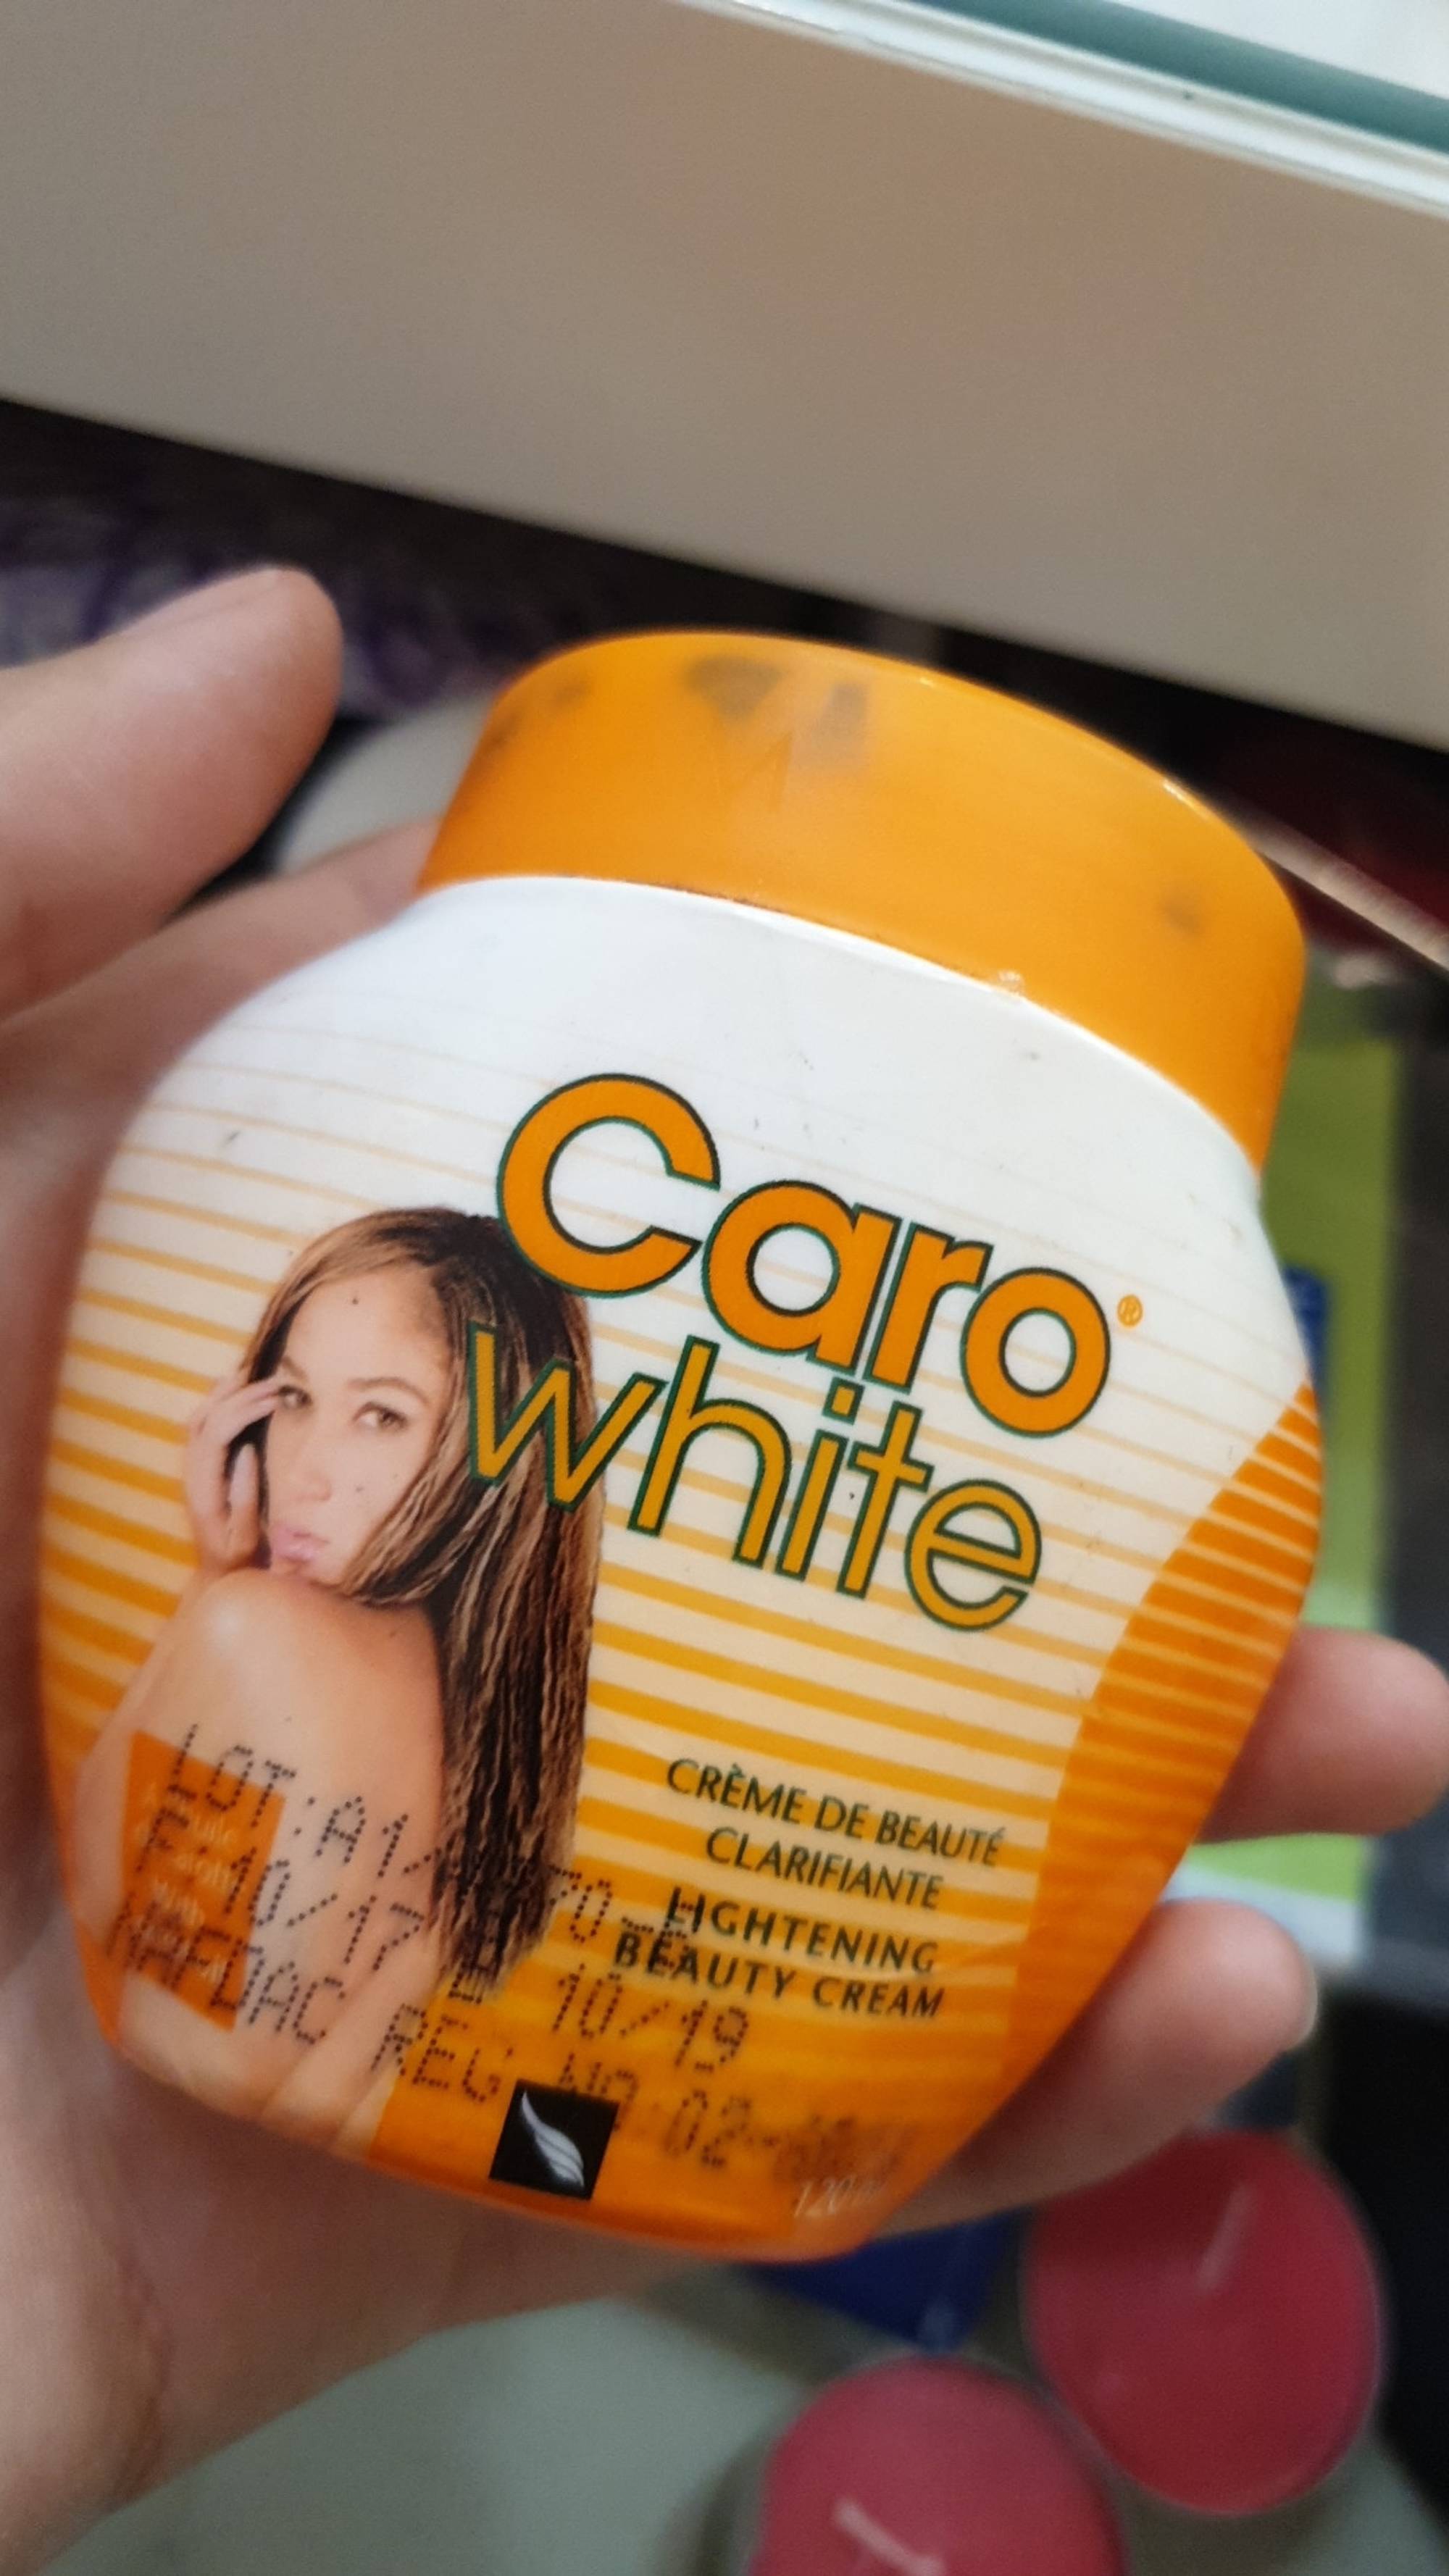 CARO WHITE - Crème de beauté clarifiante